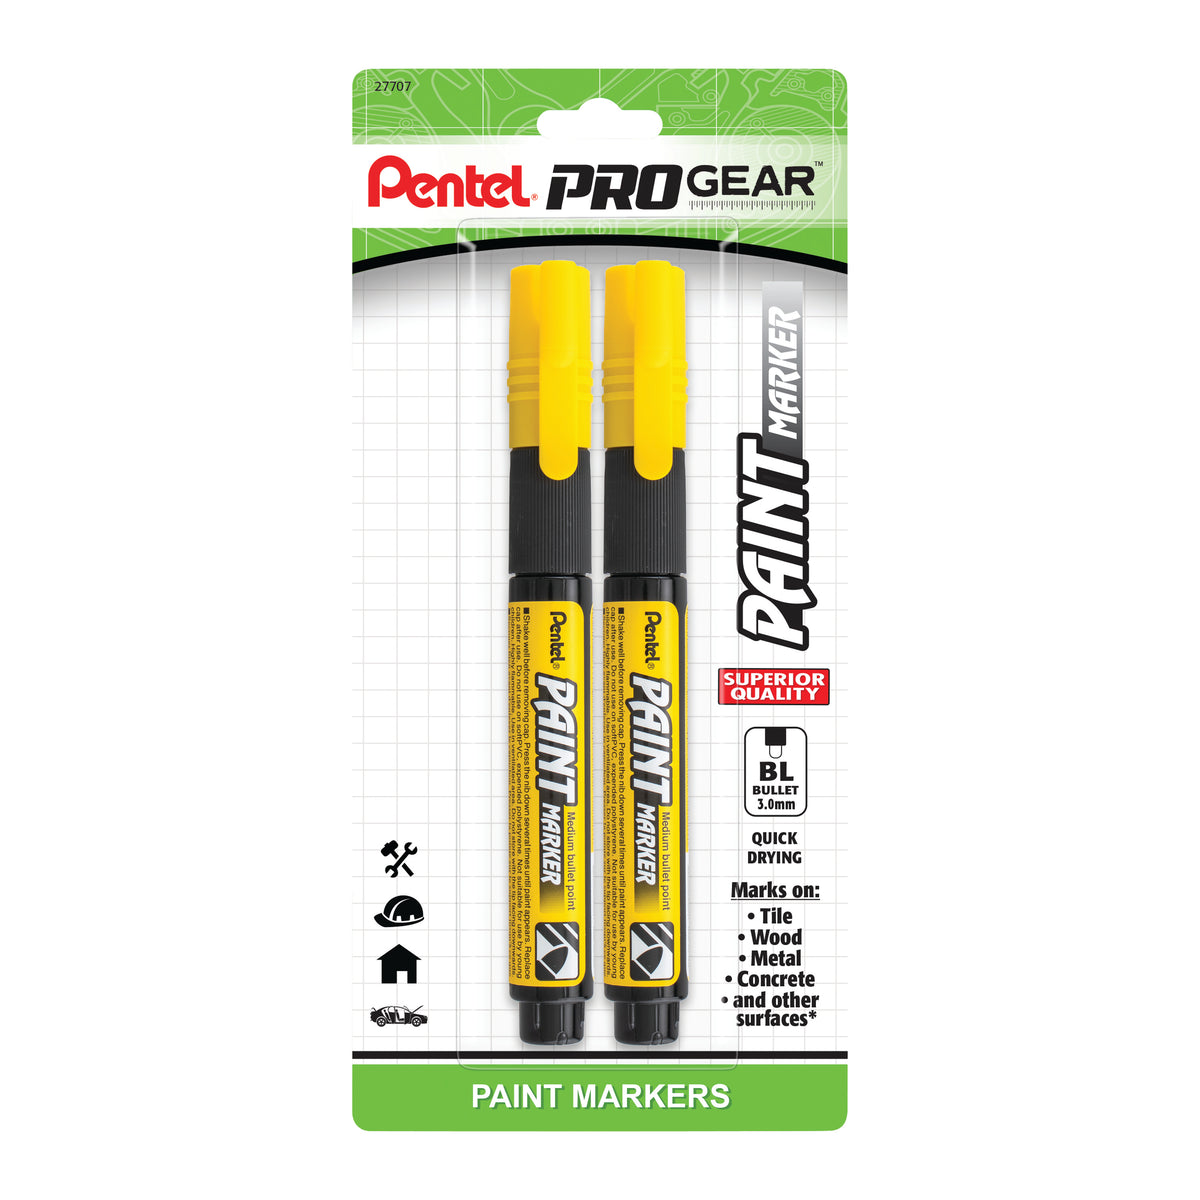 PAINT-RITER+ Oily Surface Liquid Paint Marker –